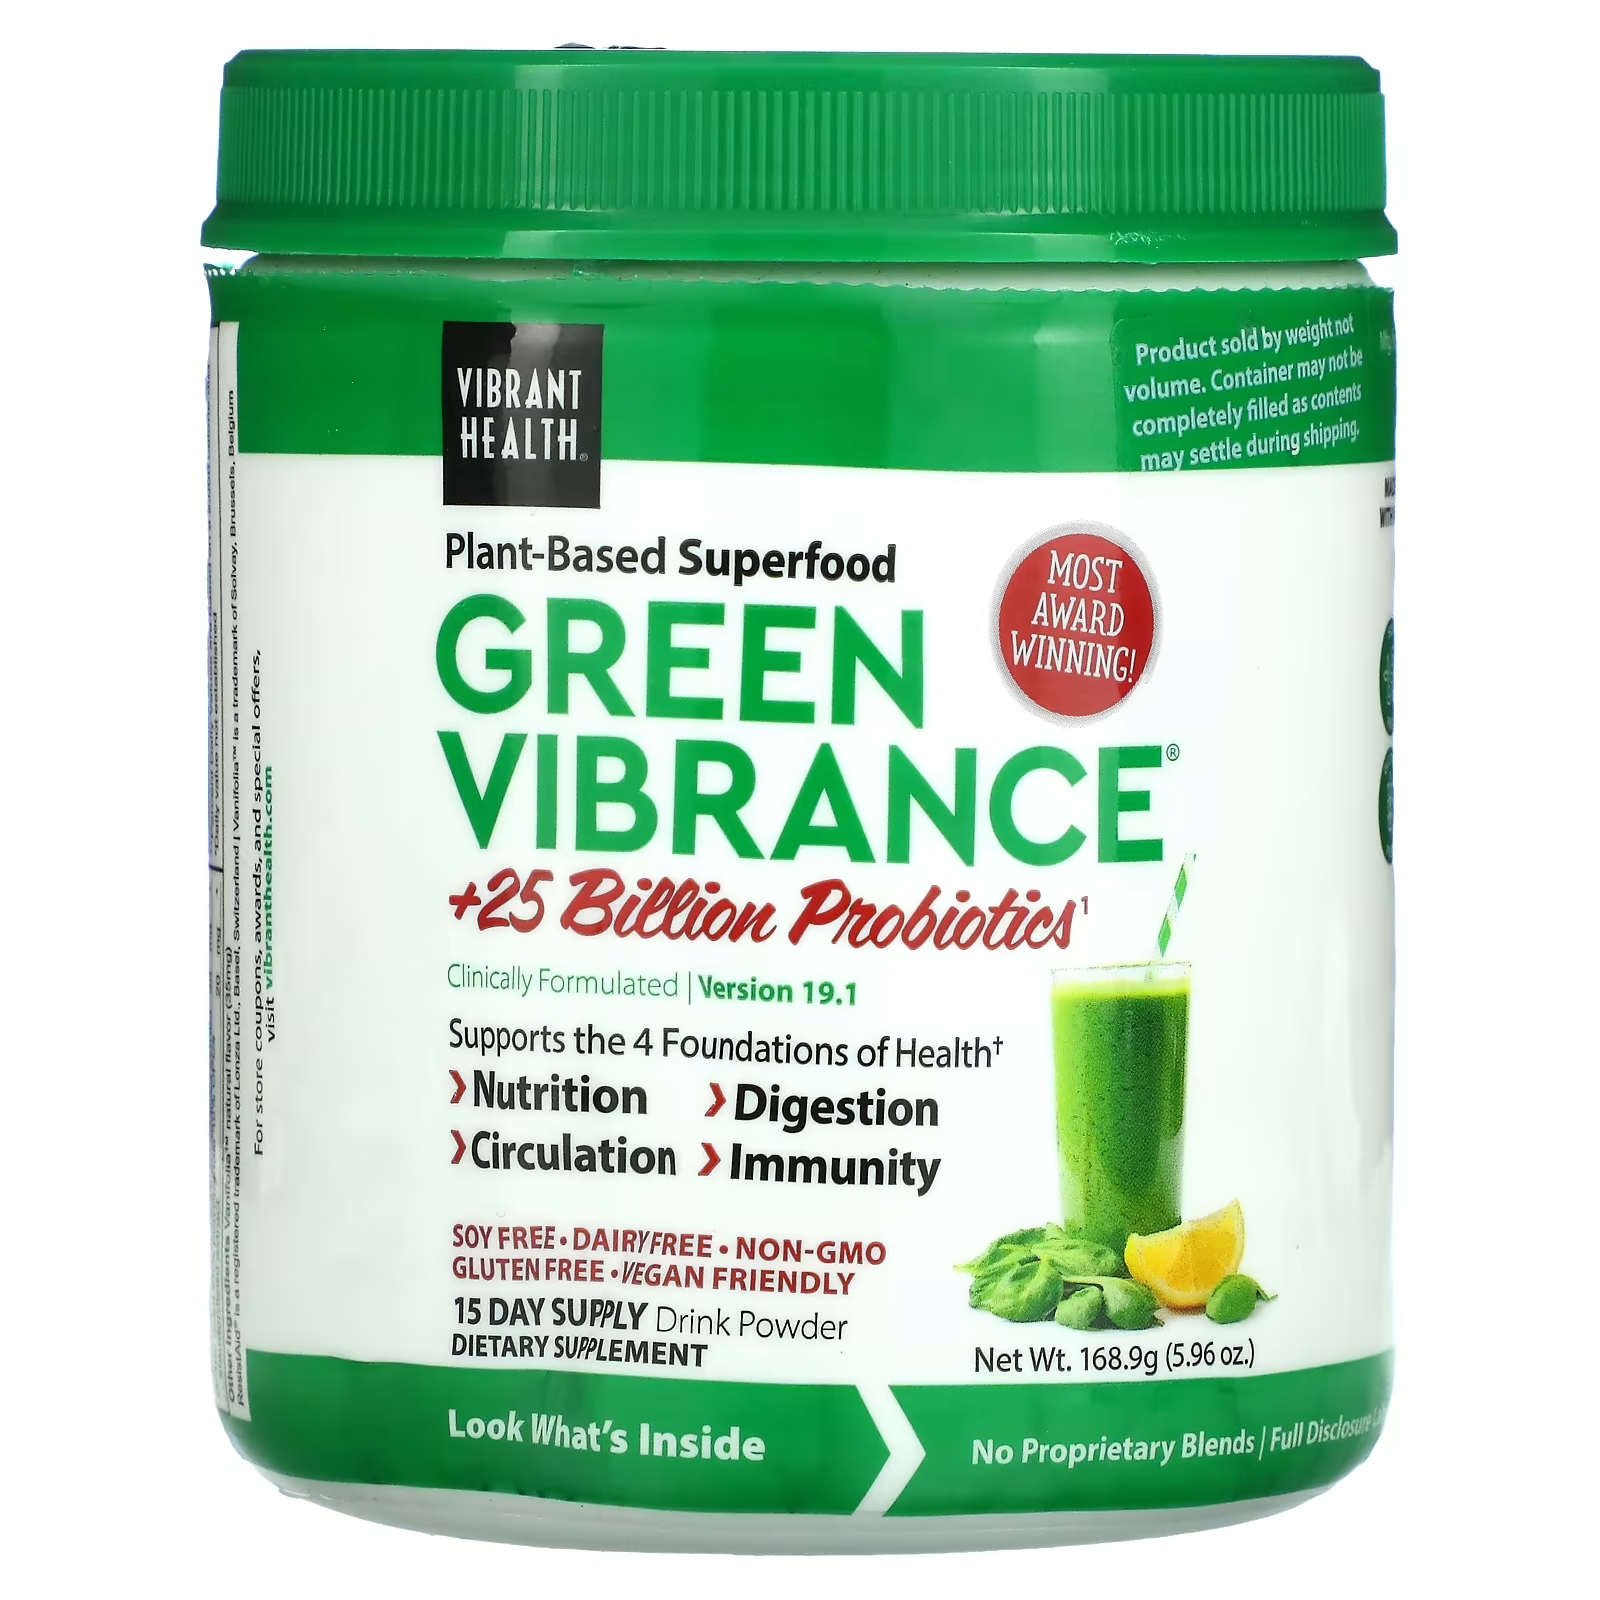 Пробиотики Vibrant Health Green Vibrance, 168 г vibrant health green vibrance 25 млрд пробиотиков версия 19 1 168 г 5 96 унции